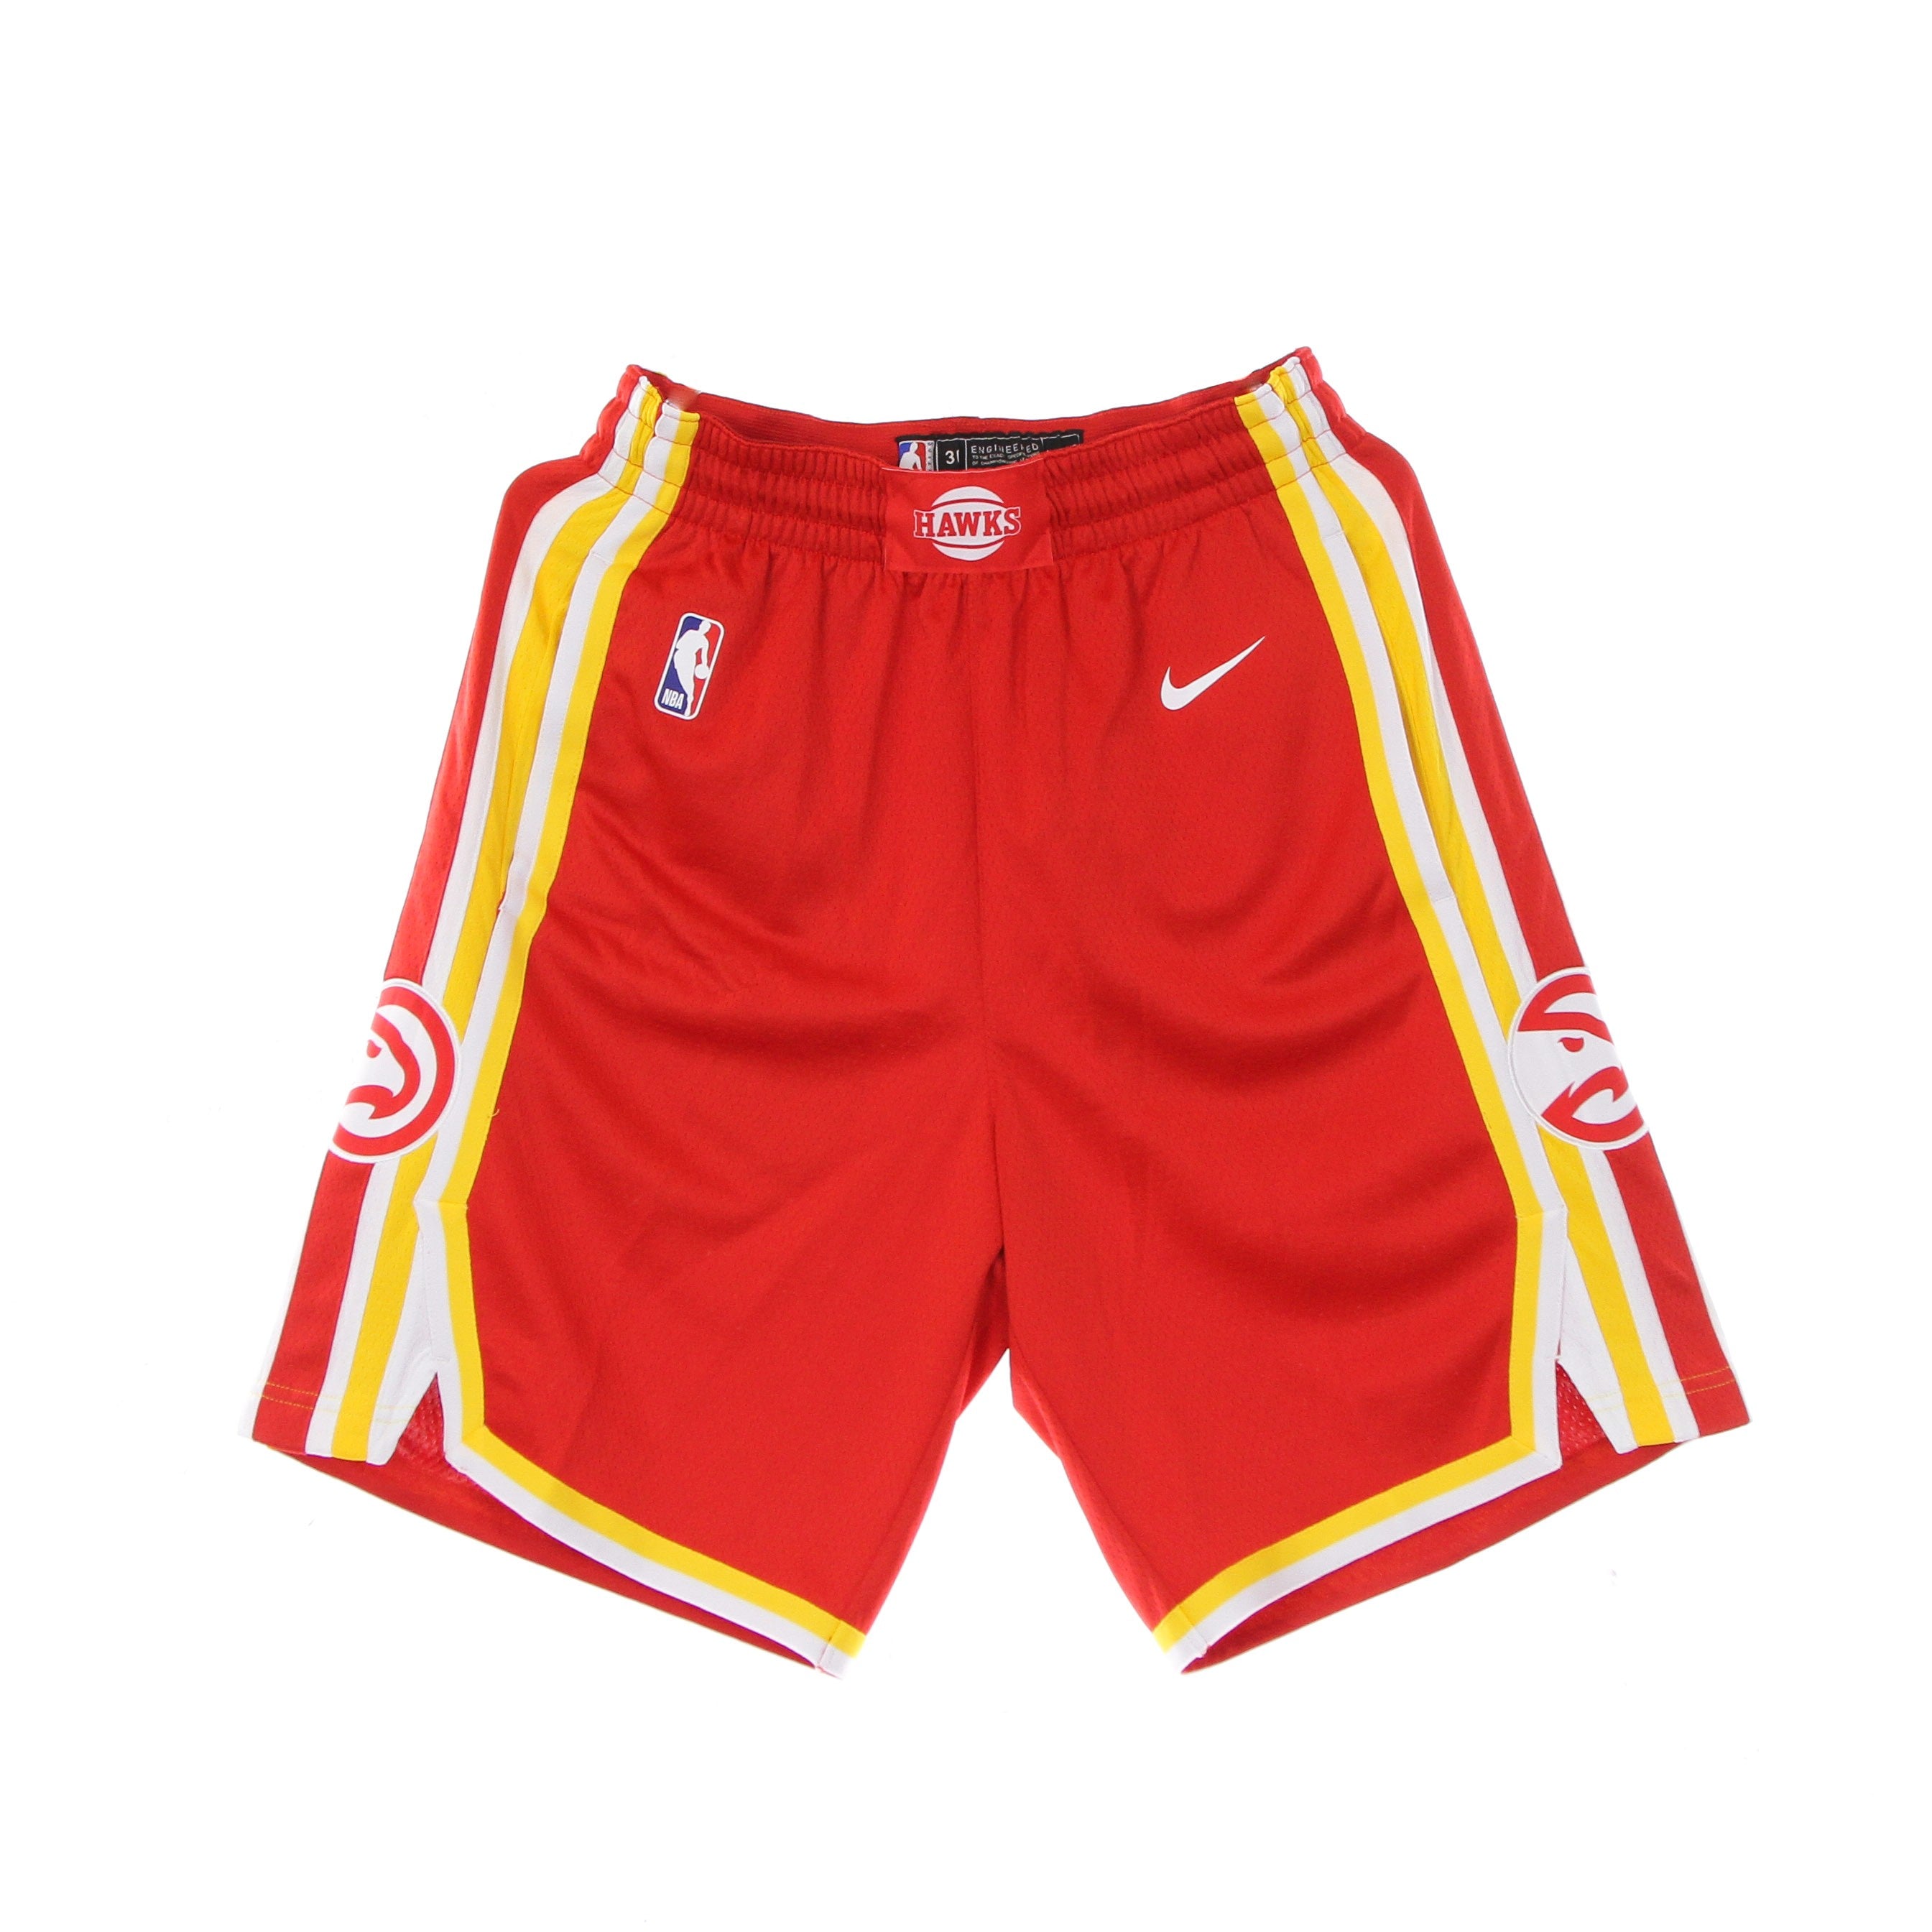 Men's Basketball Shorts Nba Dry Fit Swingman Short Icon Edition 2020 Atlhaw